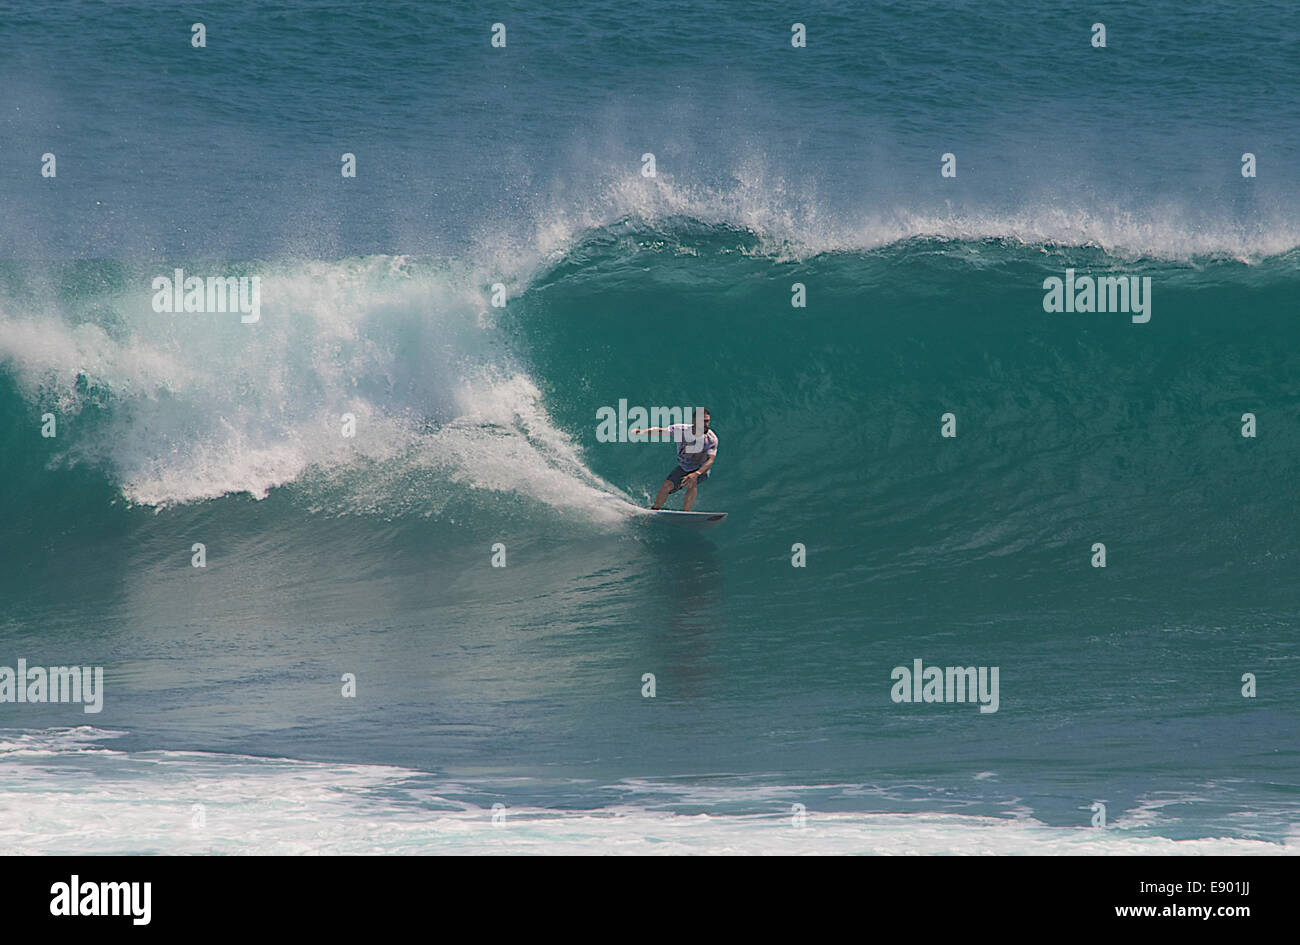 Surf board rider on catching large wave Ulu Watu Bali Indonesia Stock Photo